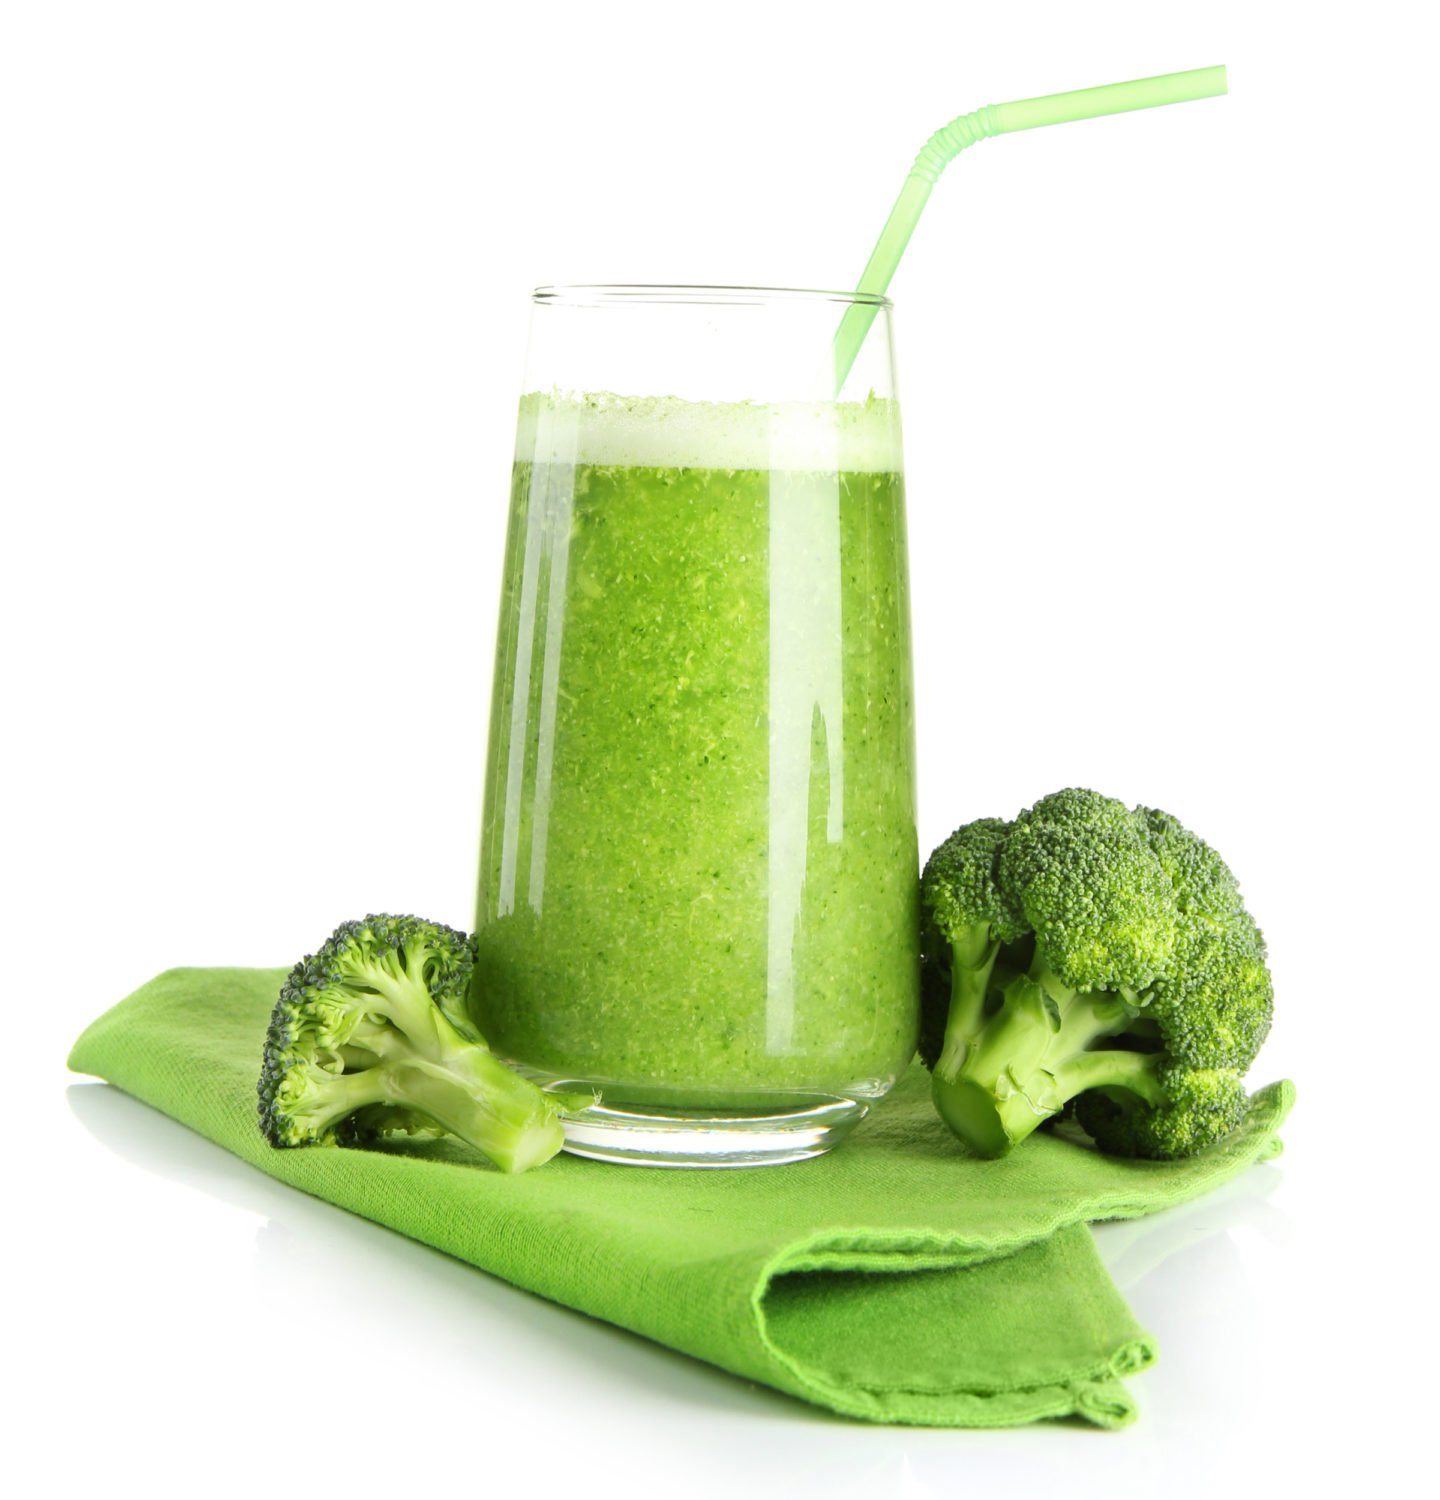 a glass of broccoli juice on a green napkin